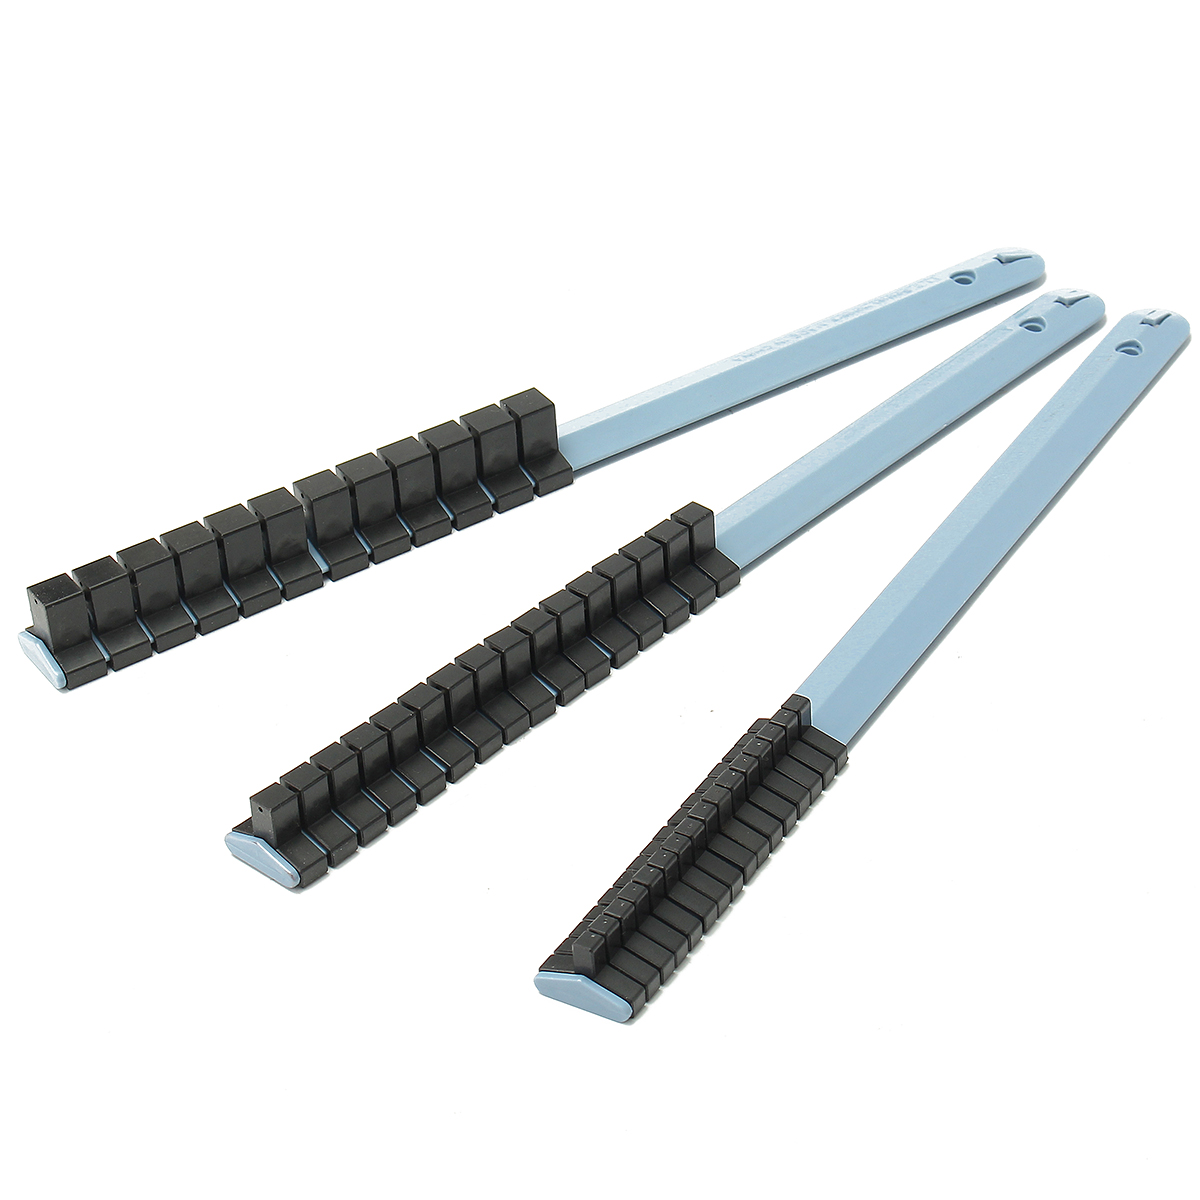 

3Pcs 1/4" 3/8" 1/2" Industrial Socket Rack Storage Divider Tray Rail Tool Holder Organizer